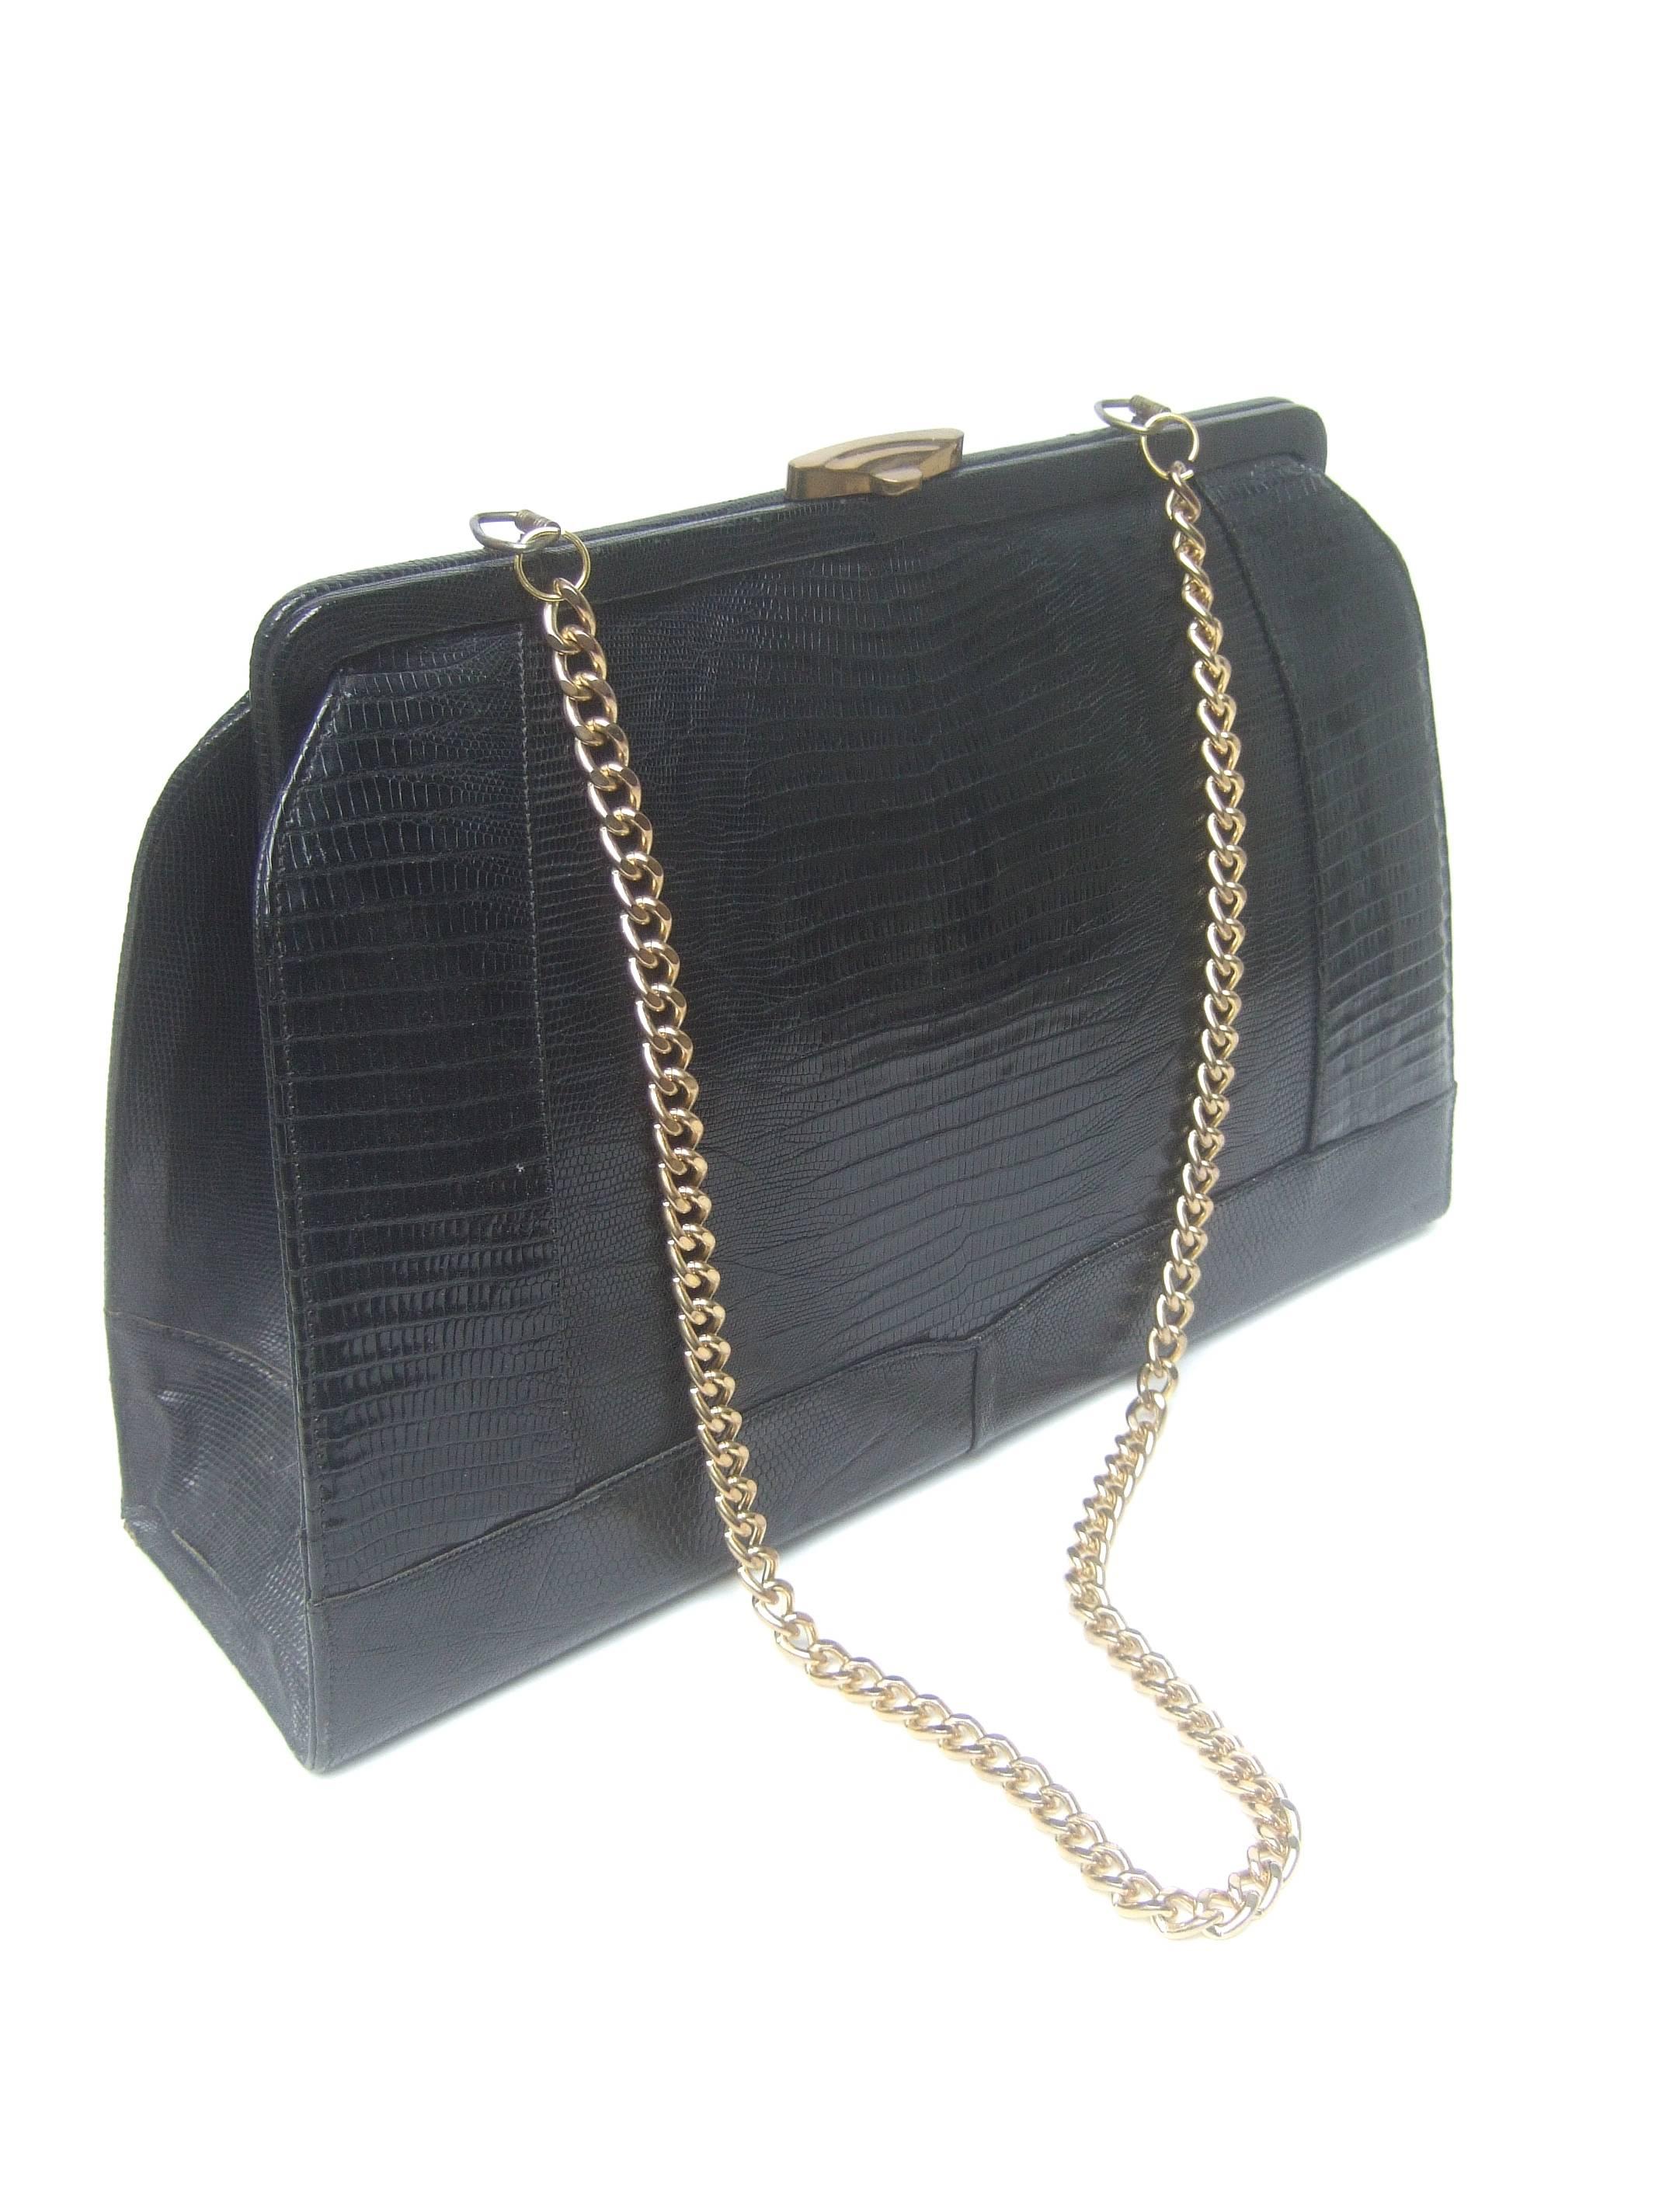 Sleek Ebony Lizard Skin Structured Handbag c 1960 5